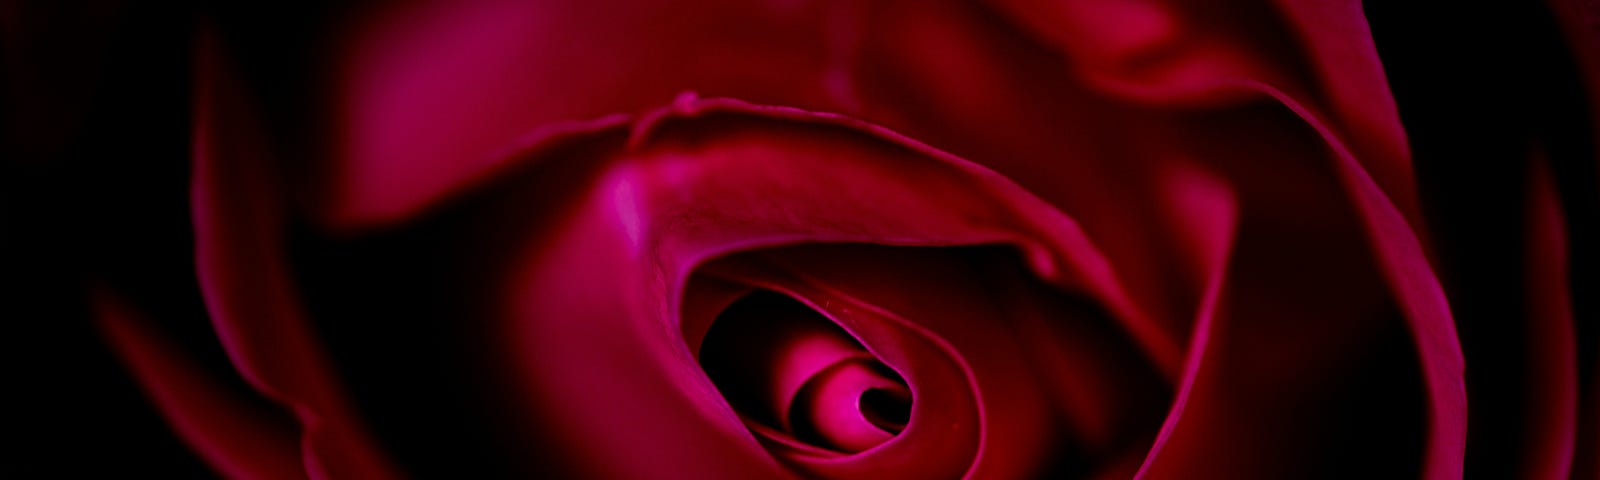 An image of a beautiful dark pink/magenta rose with spiral petals.